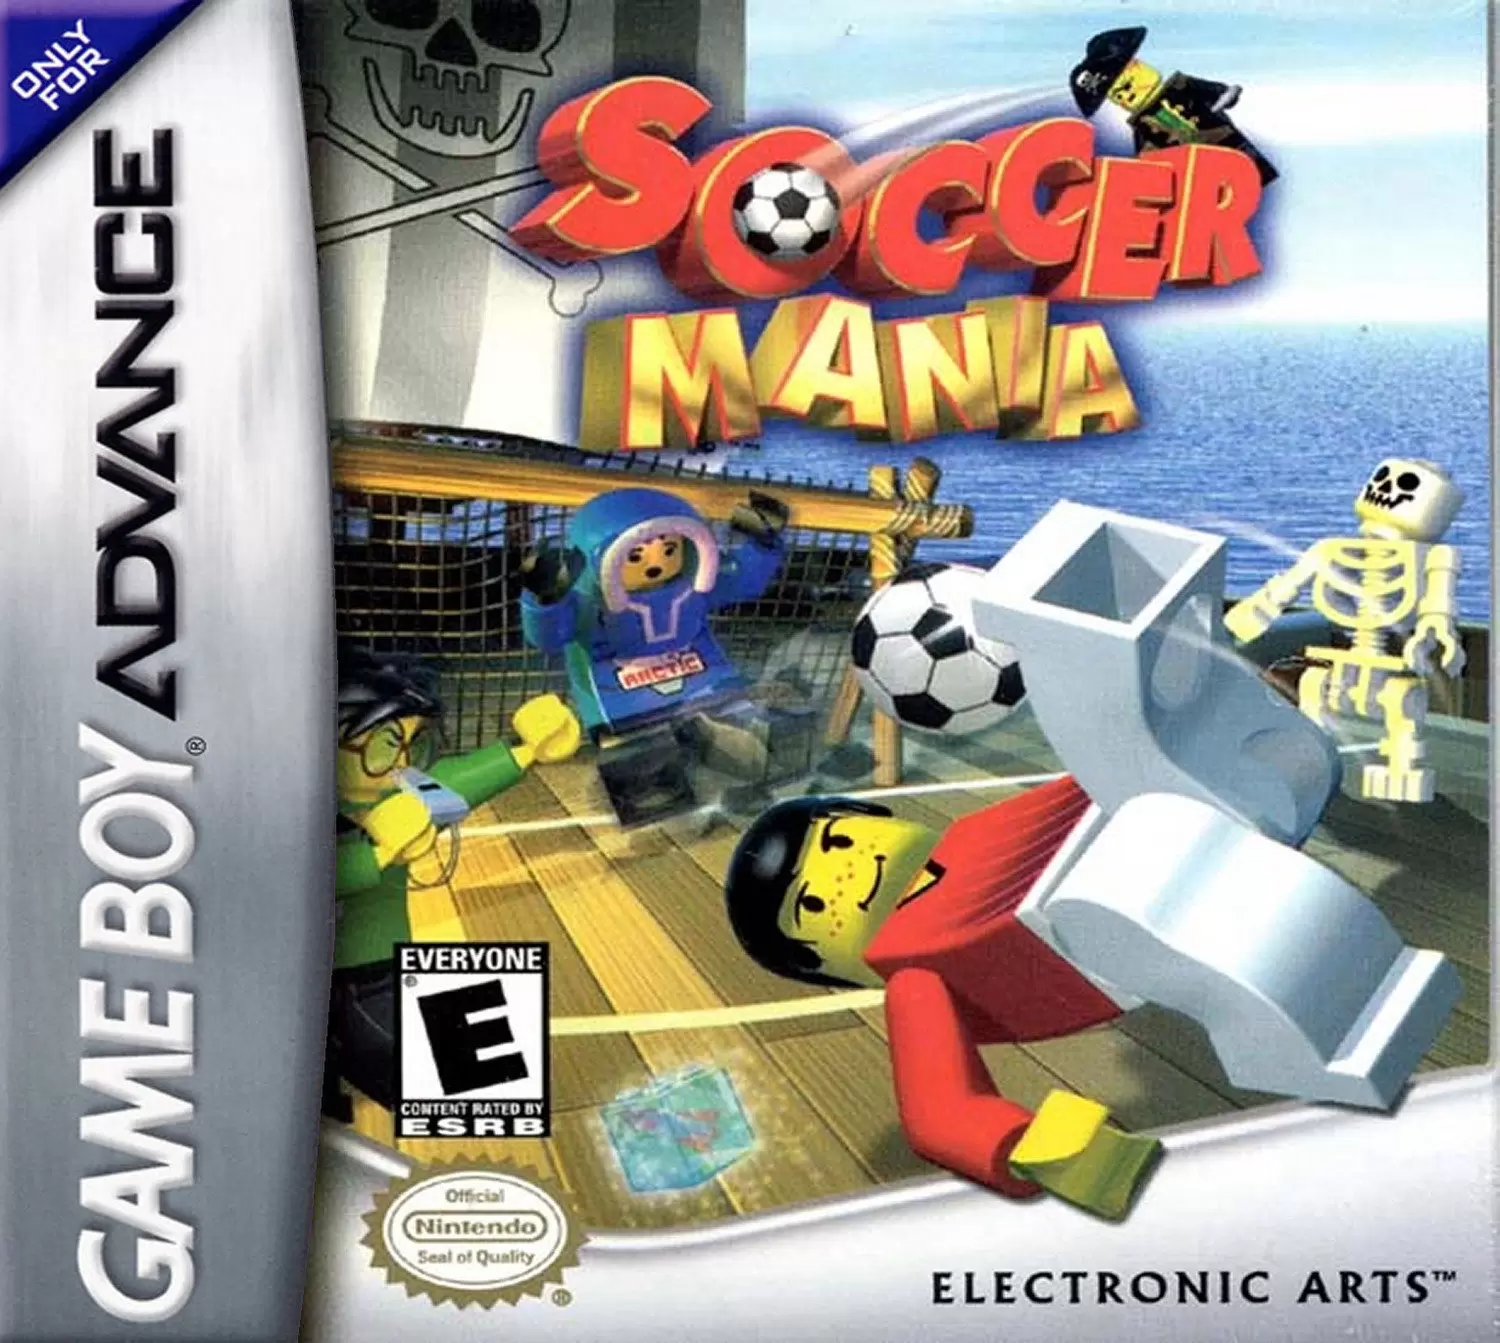 Game Boy Advance Games - Lego Soccer Mania